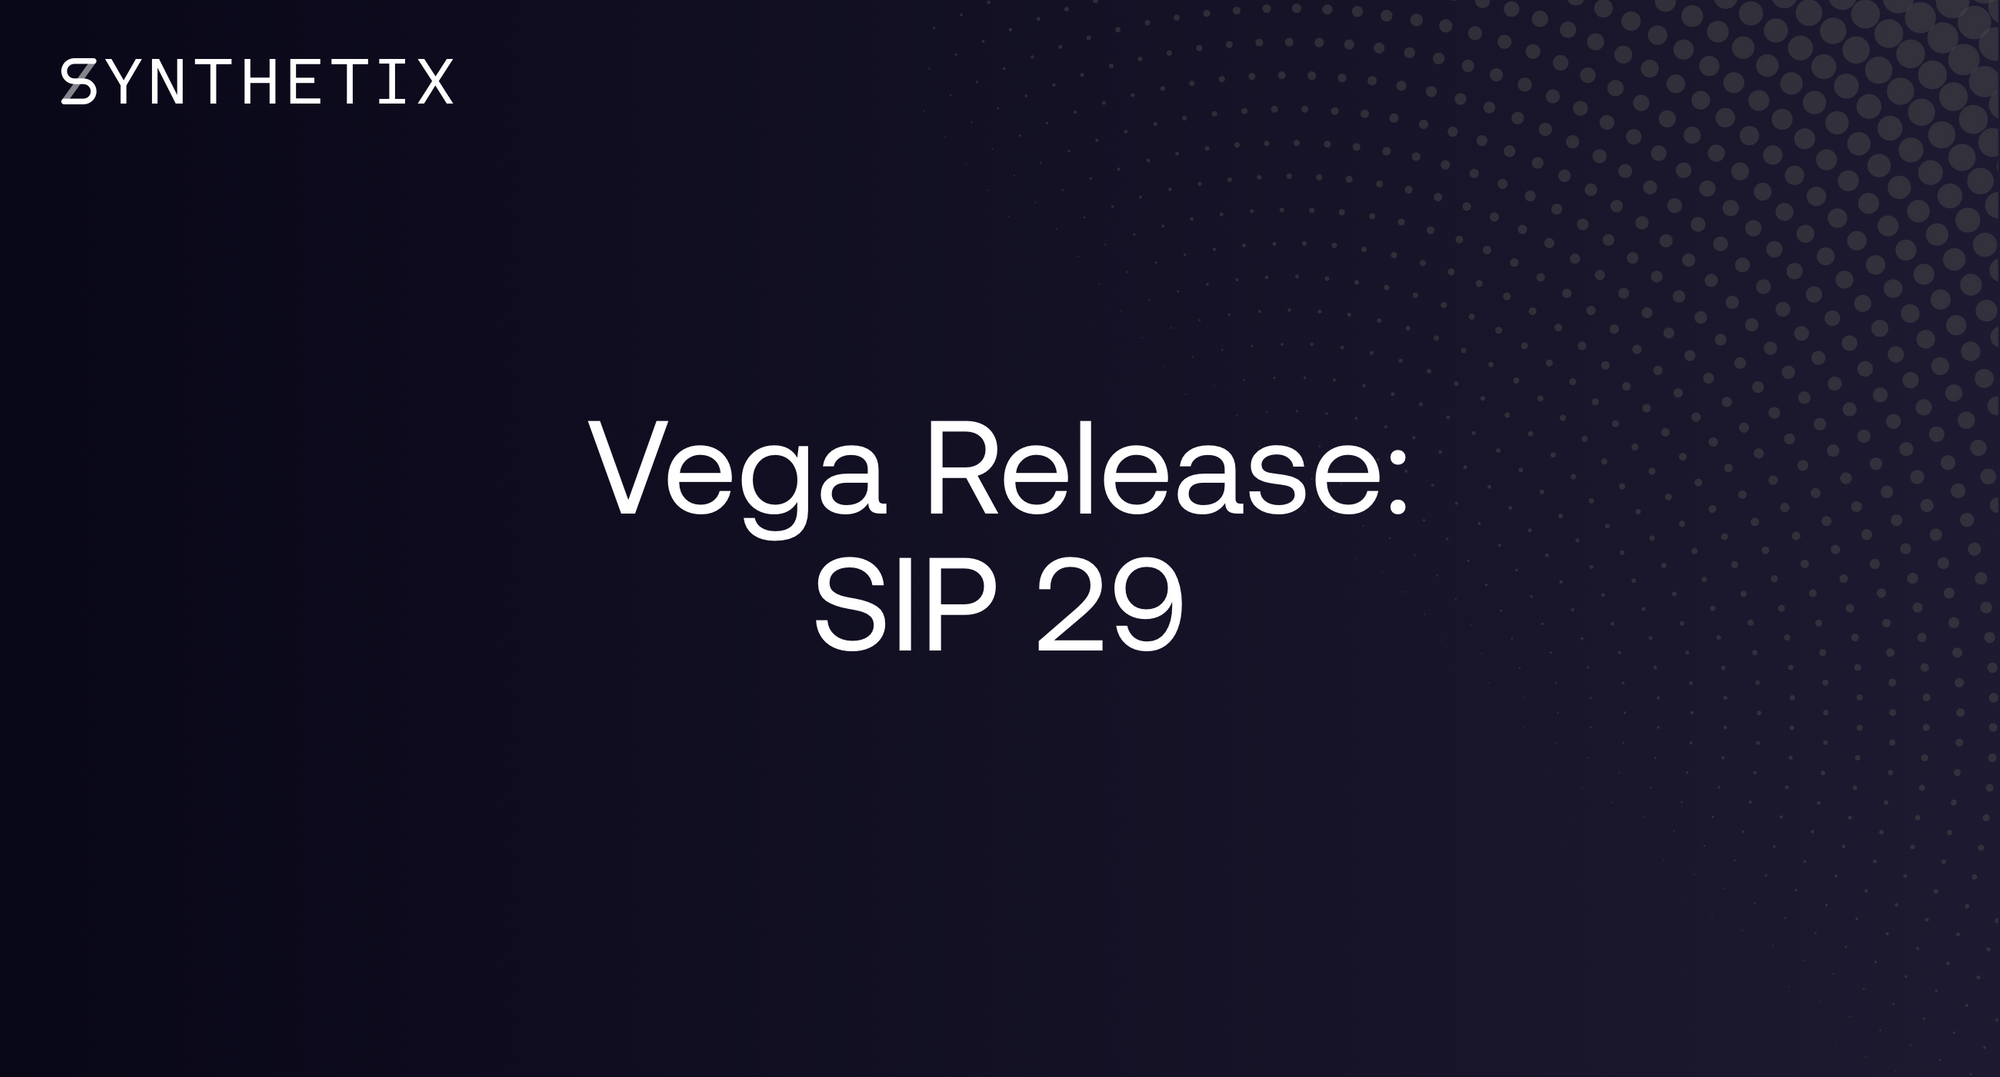 The Vega Release